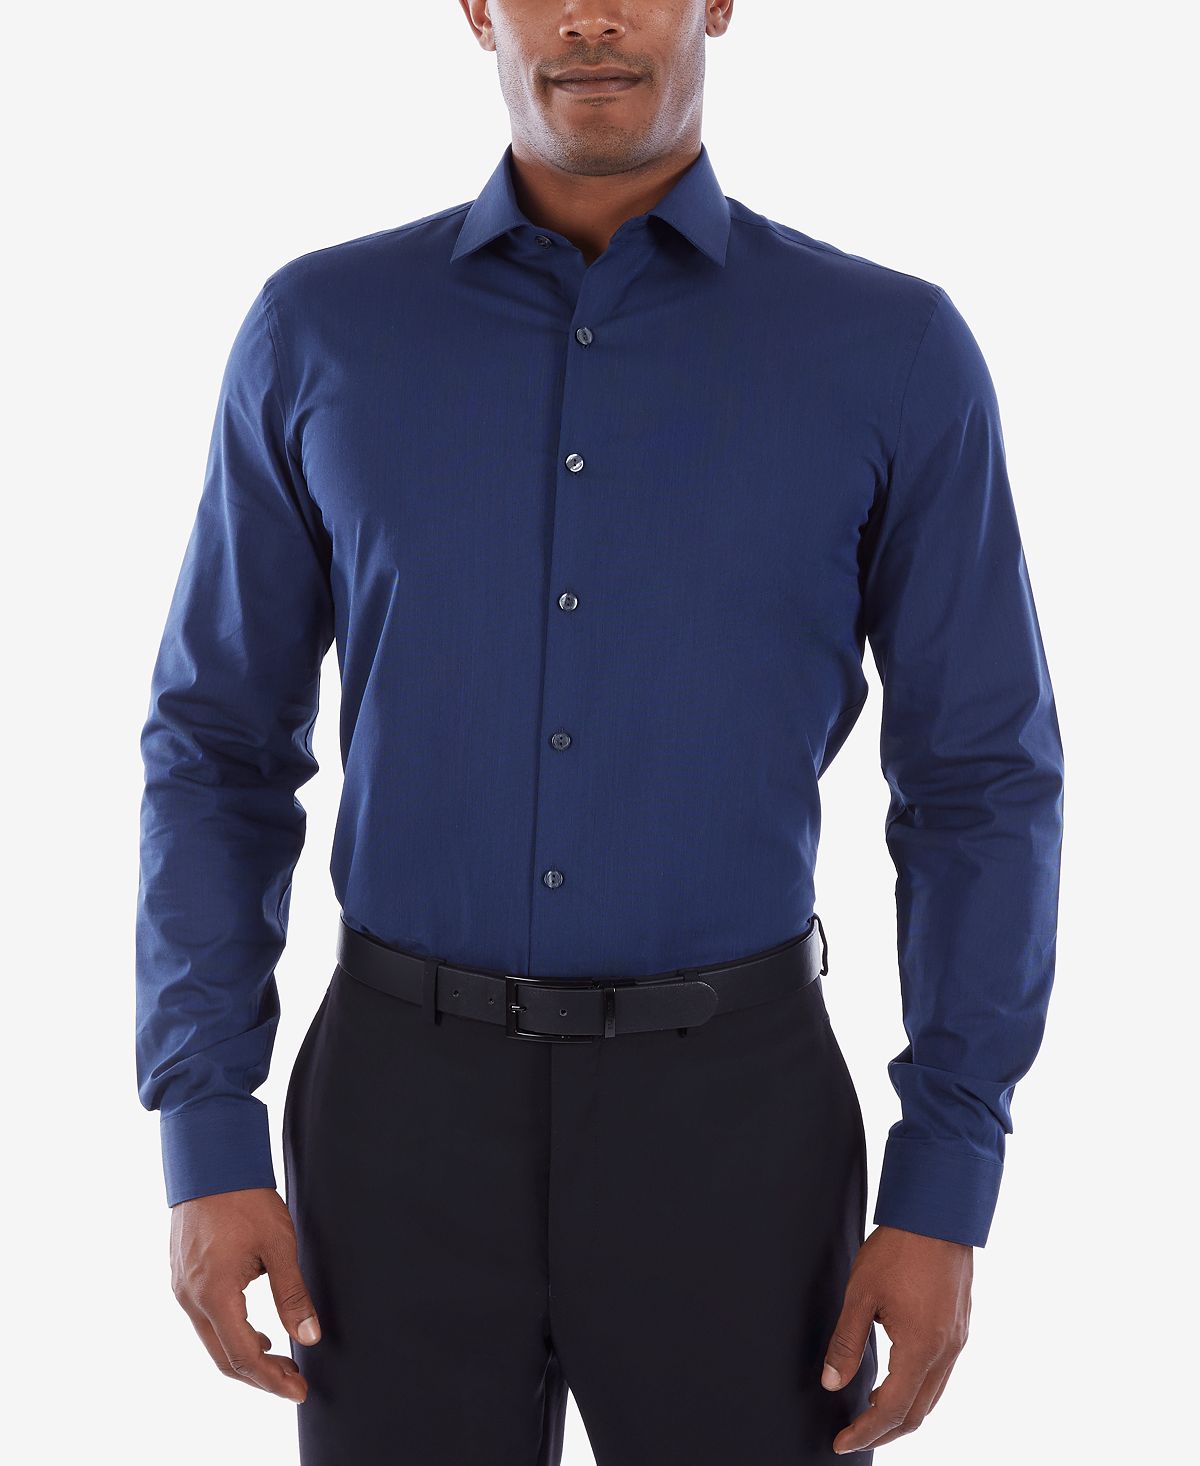 Kenneth Cole Reaction Slim-fit Techni-cole Flex Collar Solid Dress Shirt Navy